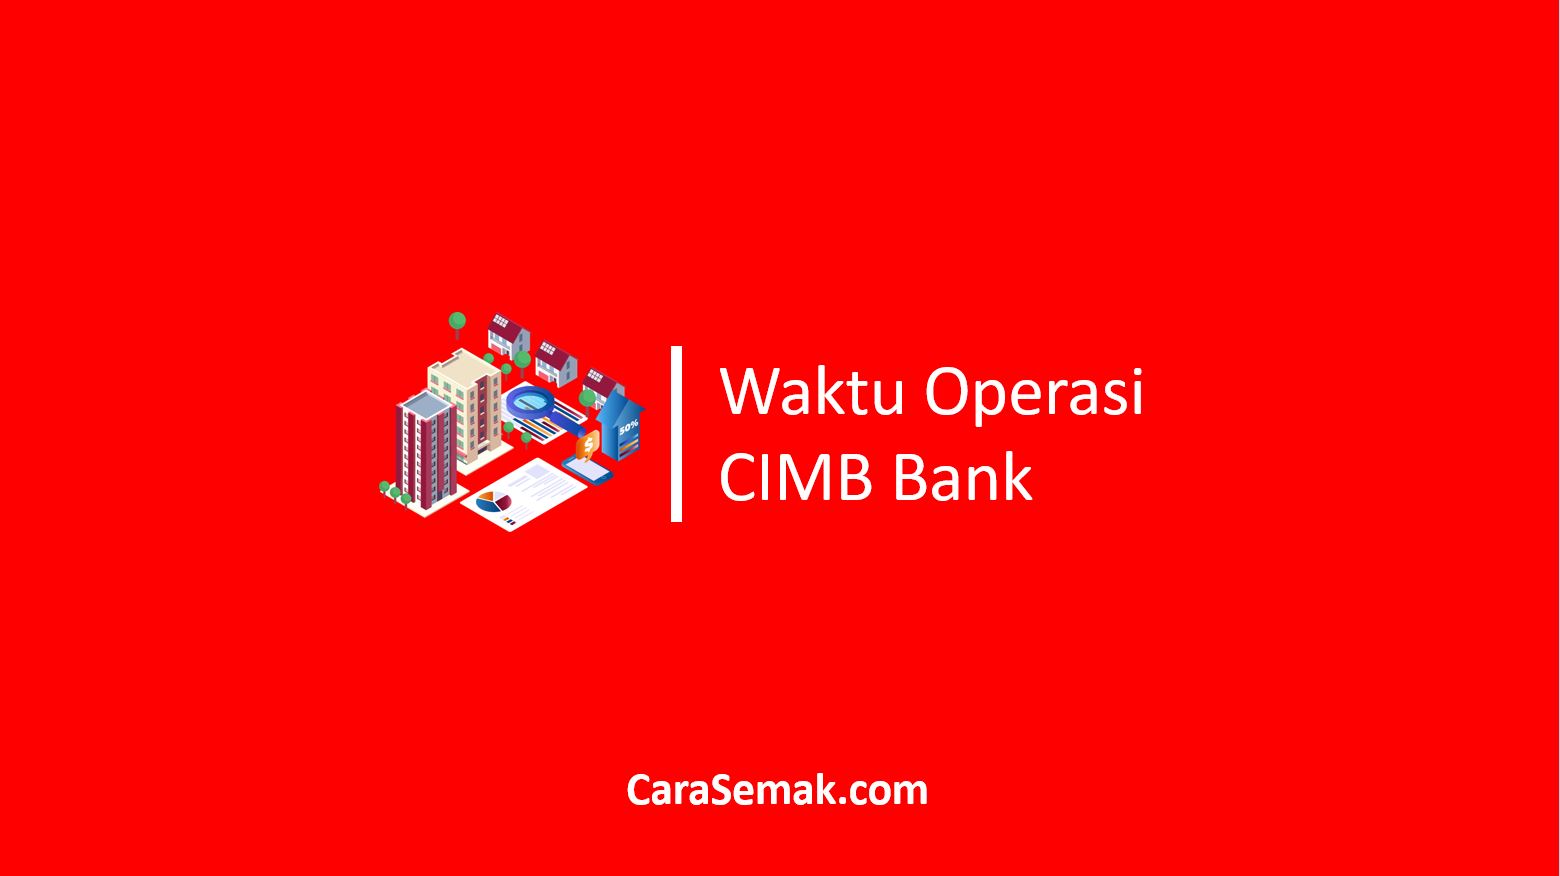 Waktu Operasi CIMB Bank